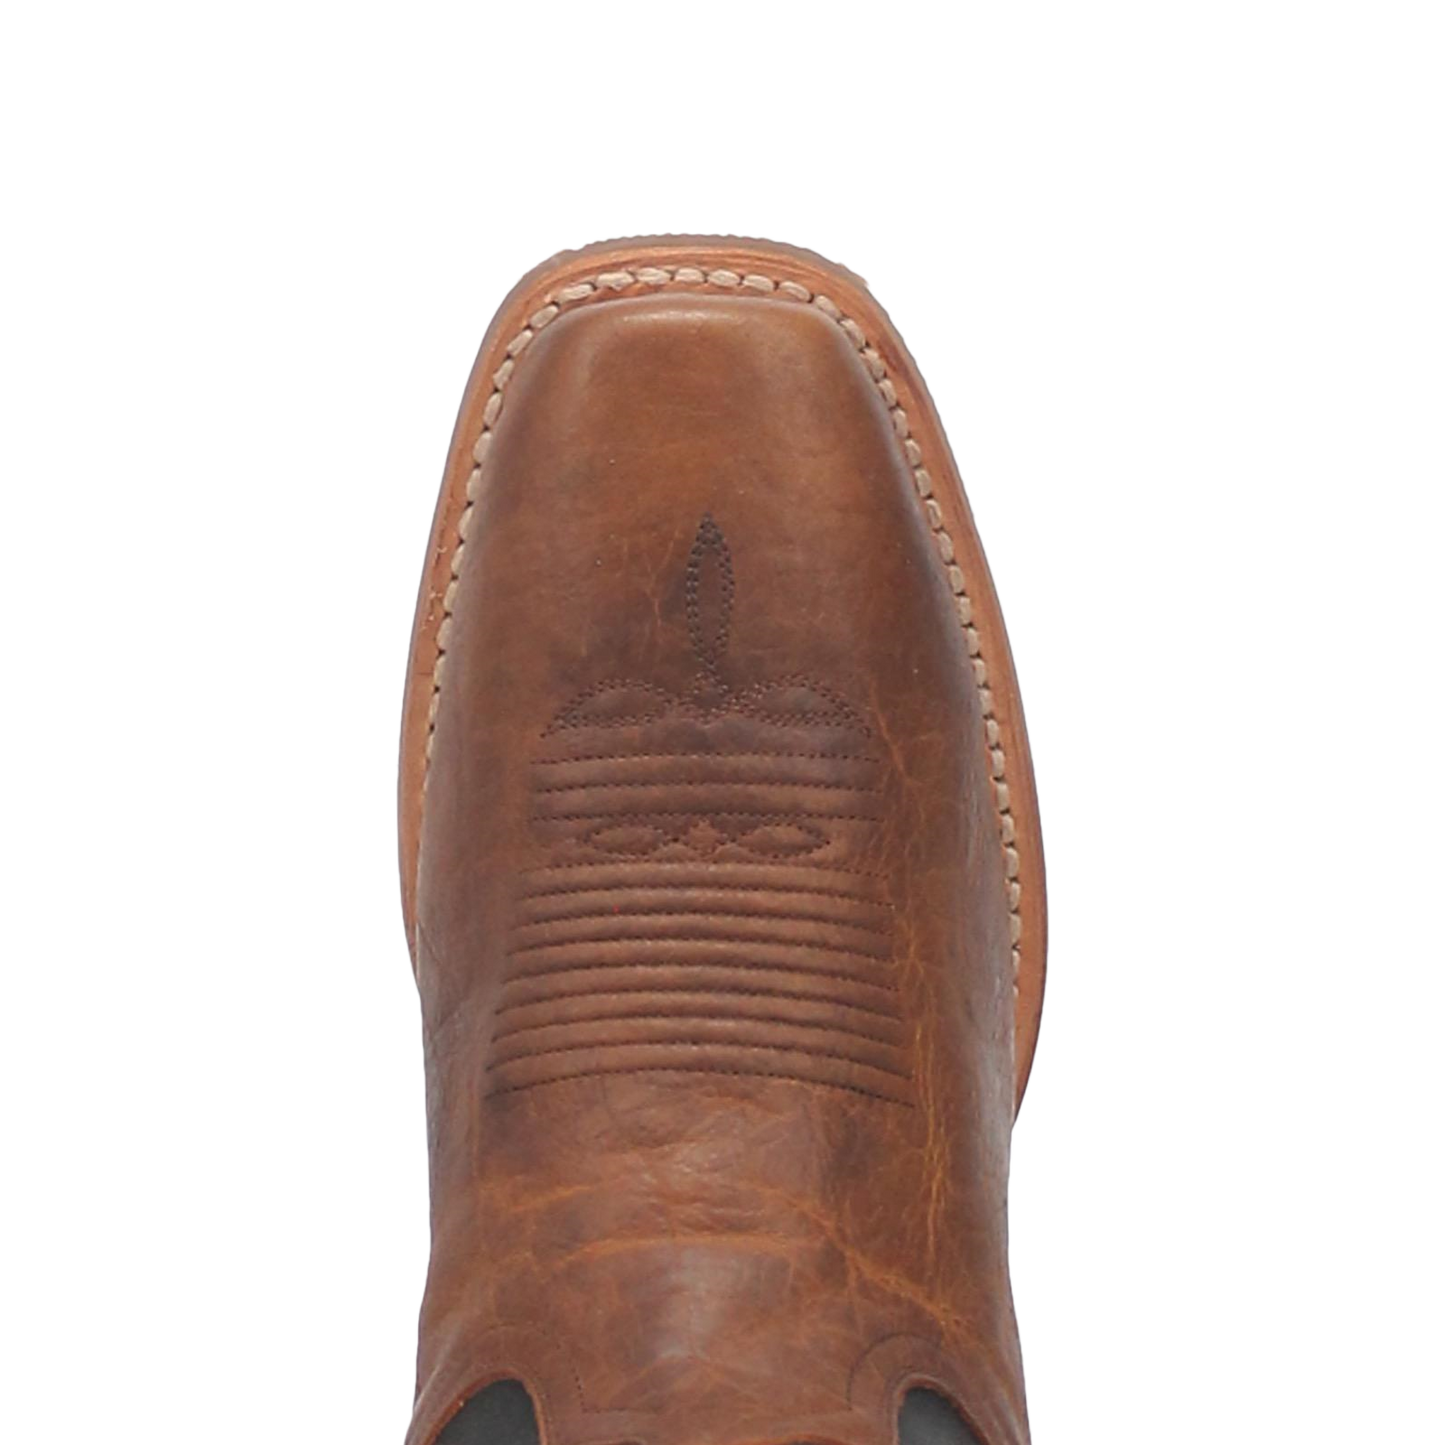 Dan Post® Men's Richland Saddle Brown Western Boots DP3393